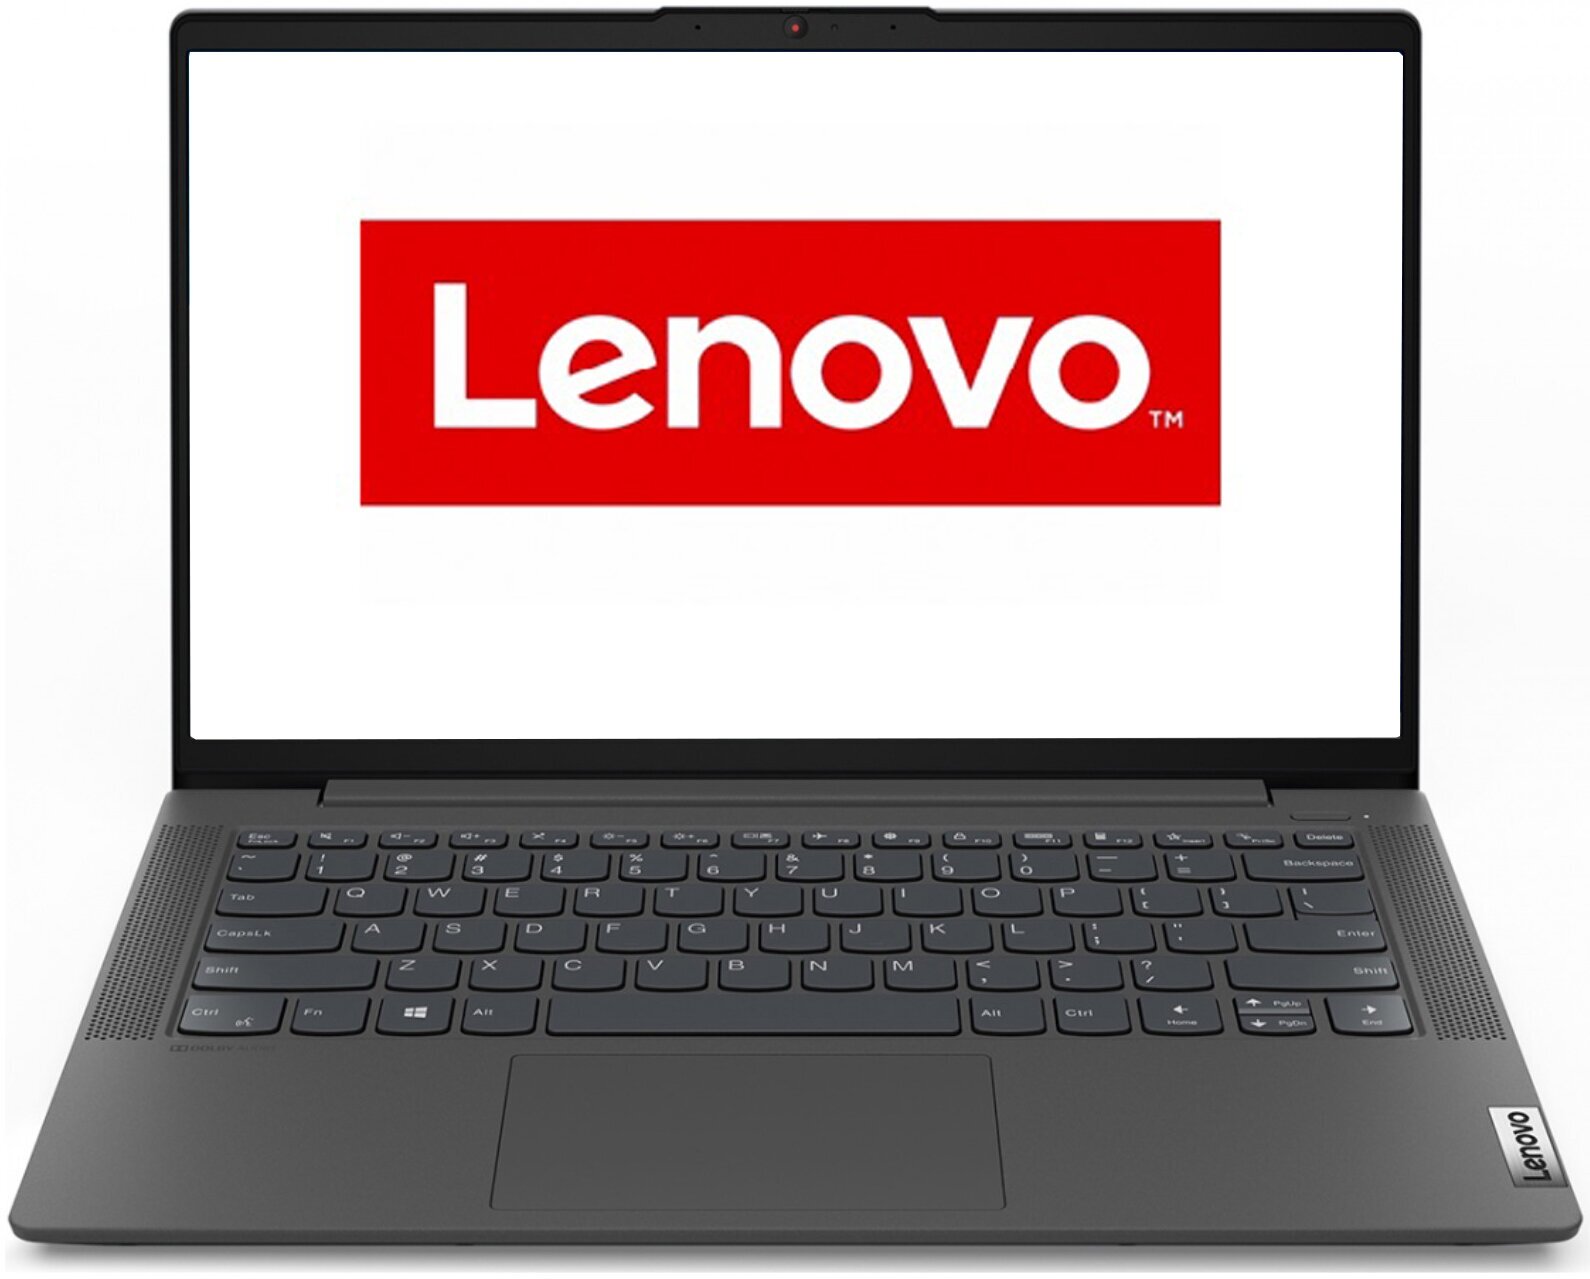 Ноутбук Lenovo IdeaPad 5 14IIL05 Grey 81YH0066RK (Intel Core i5-1035G1 1.0 GHz/8192Mb/512Gb SSD/Intel HD Graphics/Wi-Fi/Bluetooth/Cam/14.0/1920x1080/no OS)